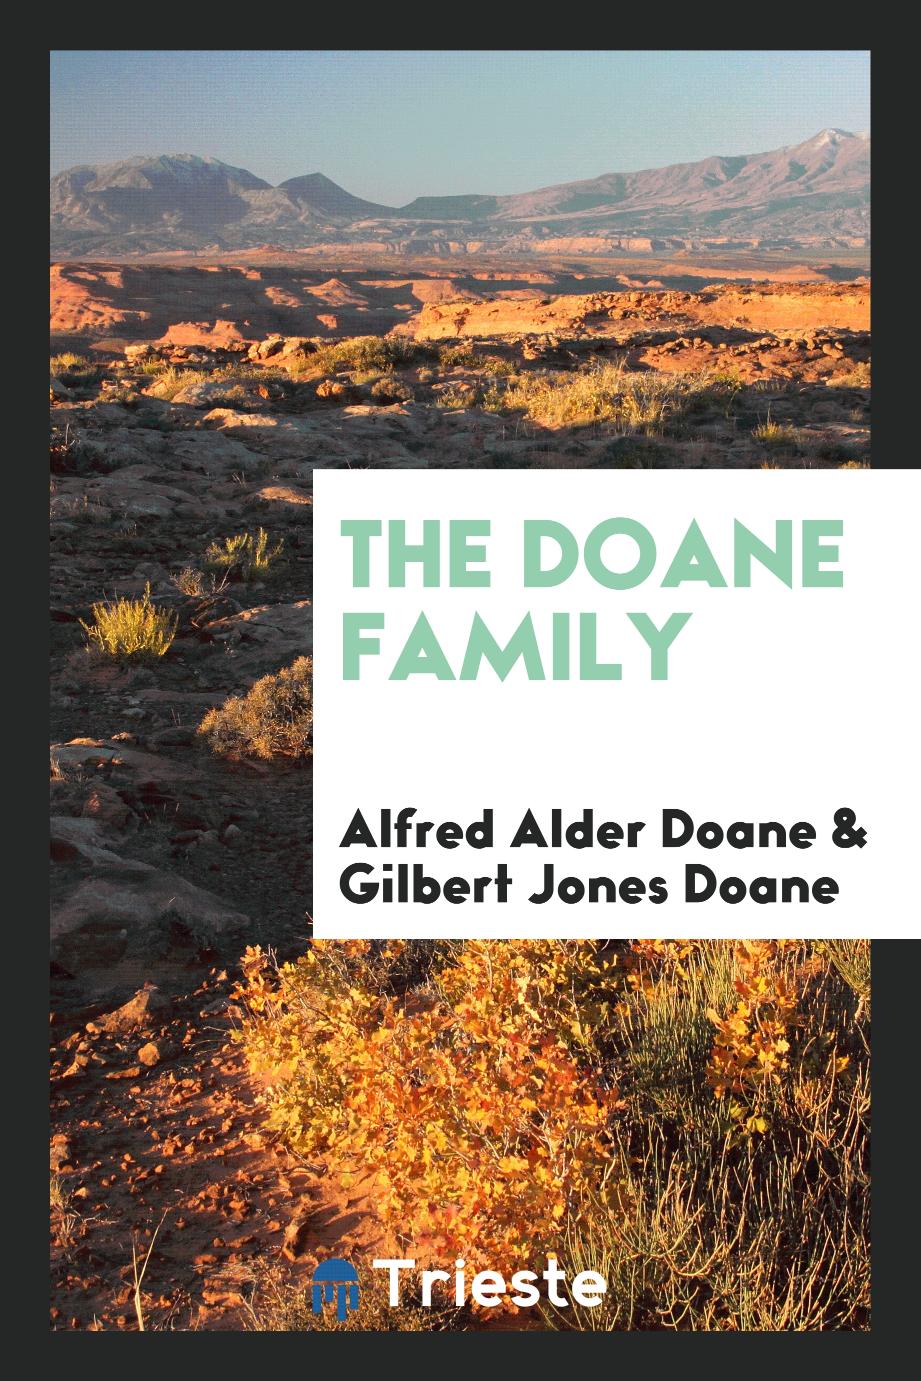 The Doane family